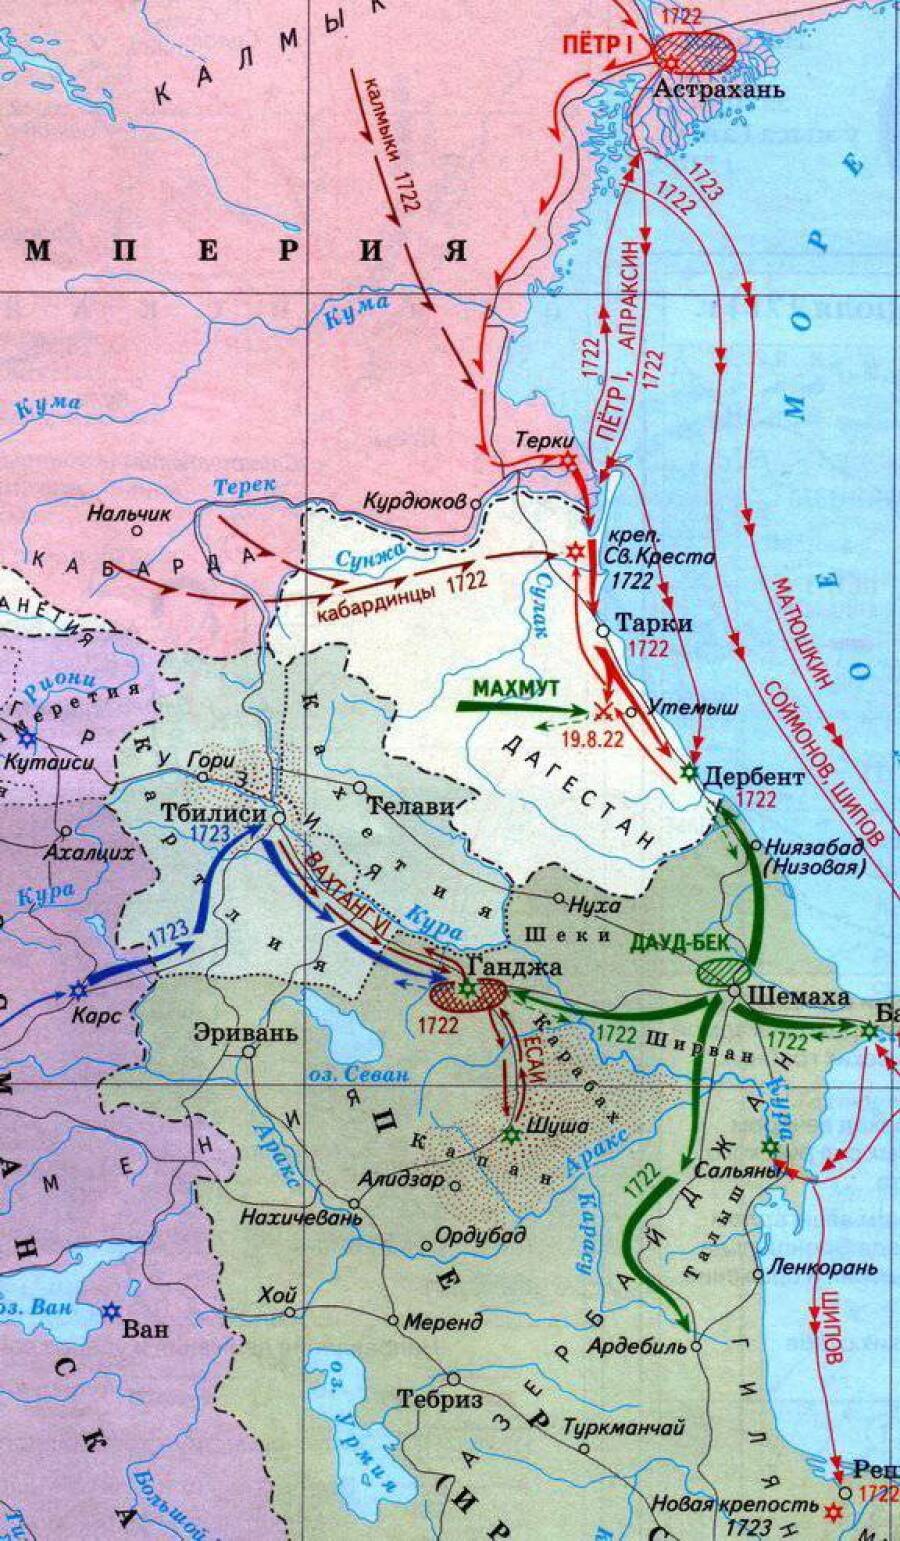 Карта походов Петра I. Персидская война 1723-24 г.